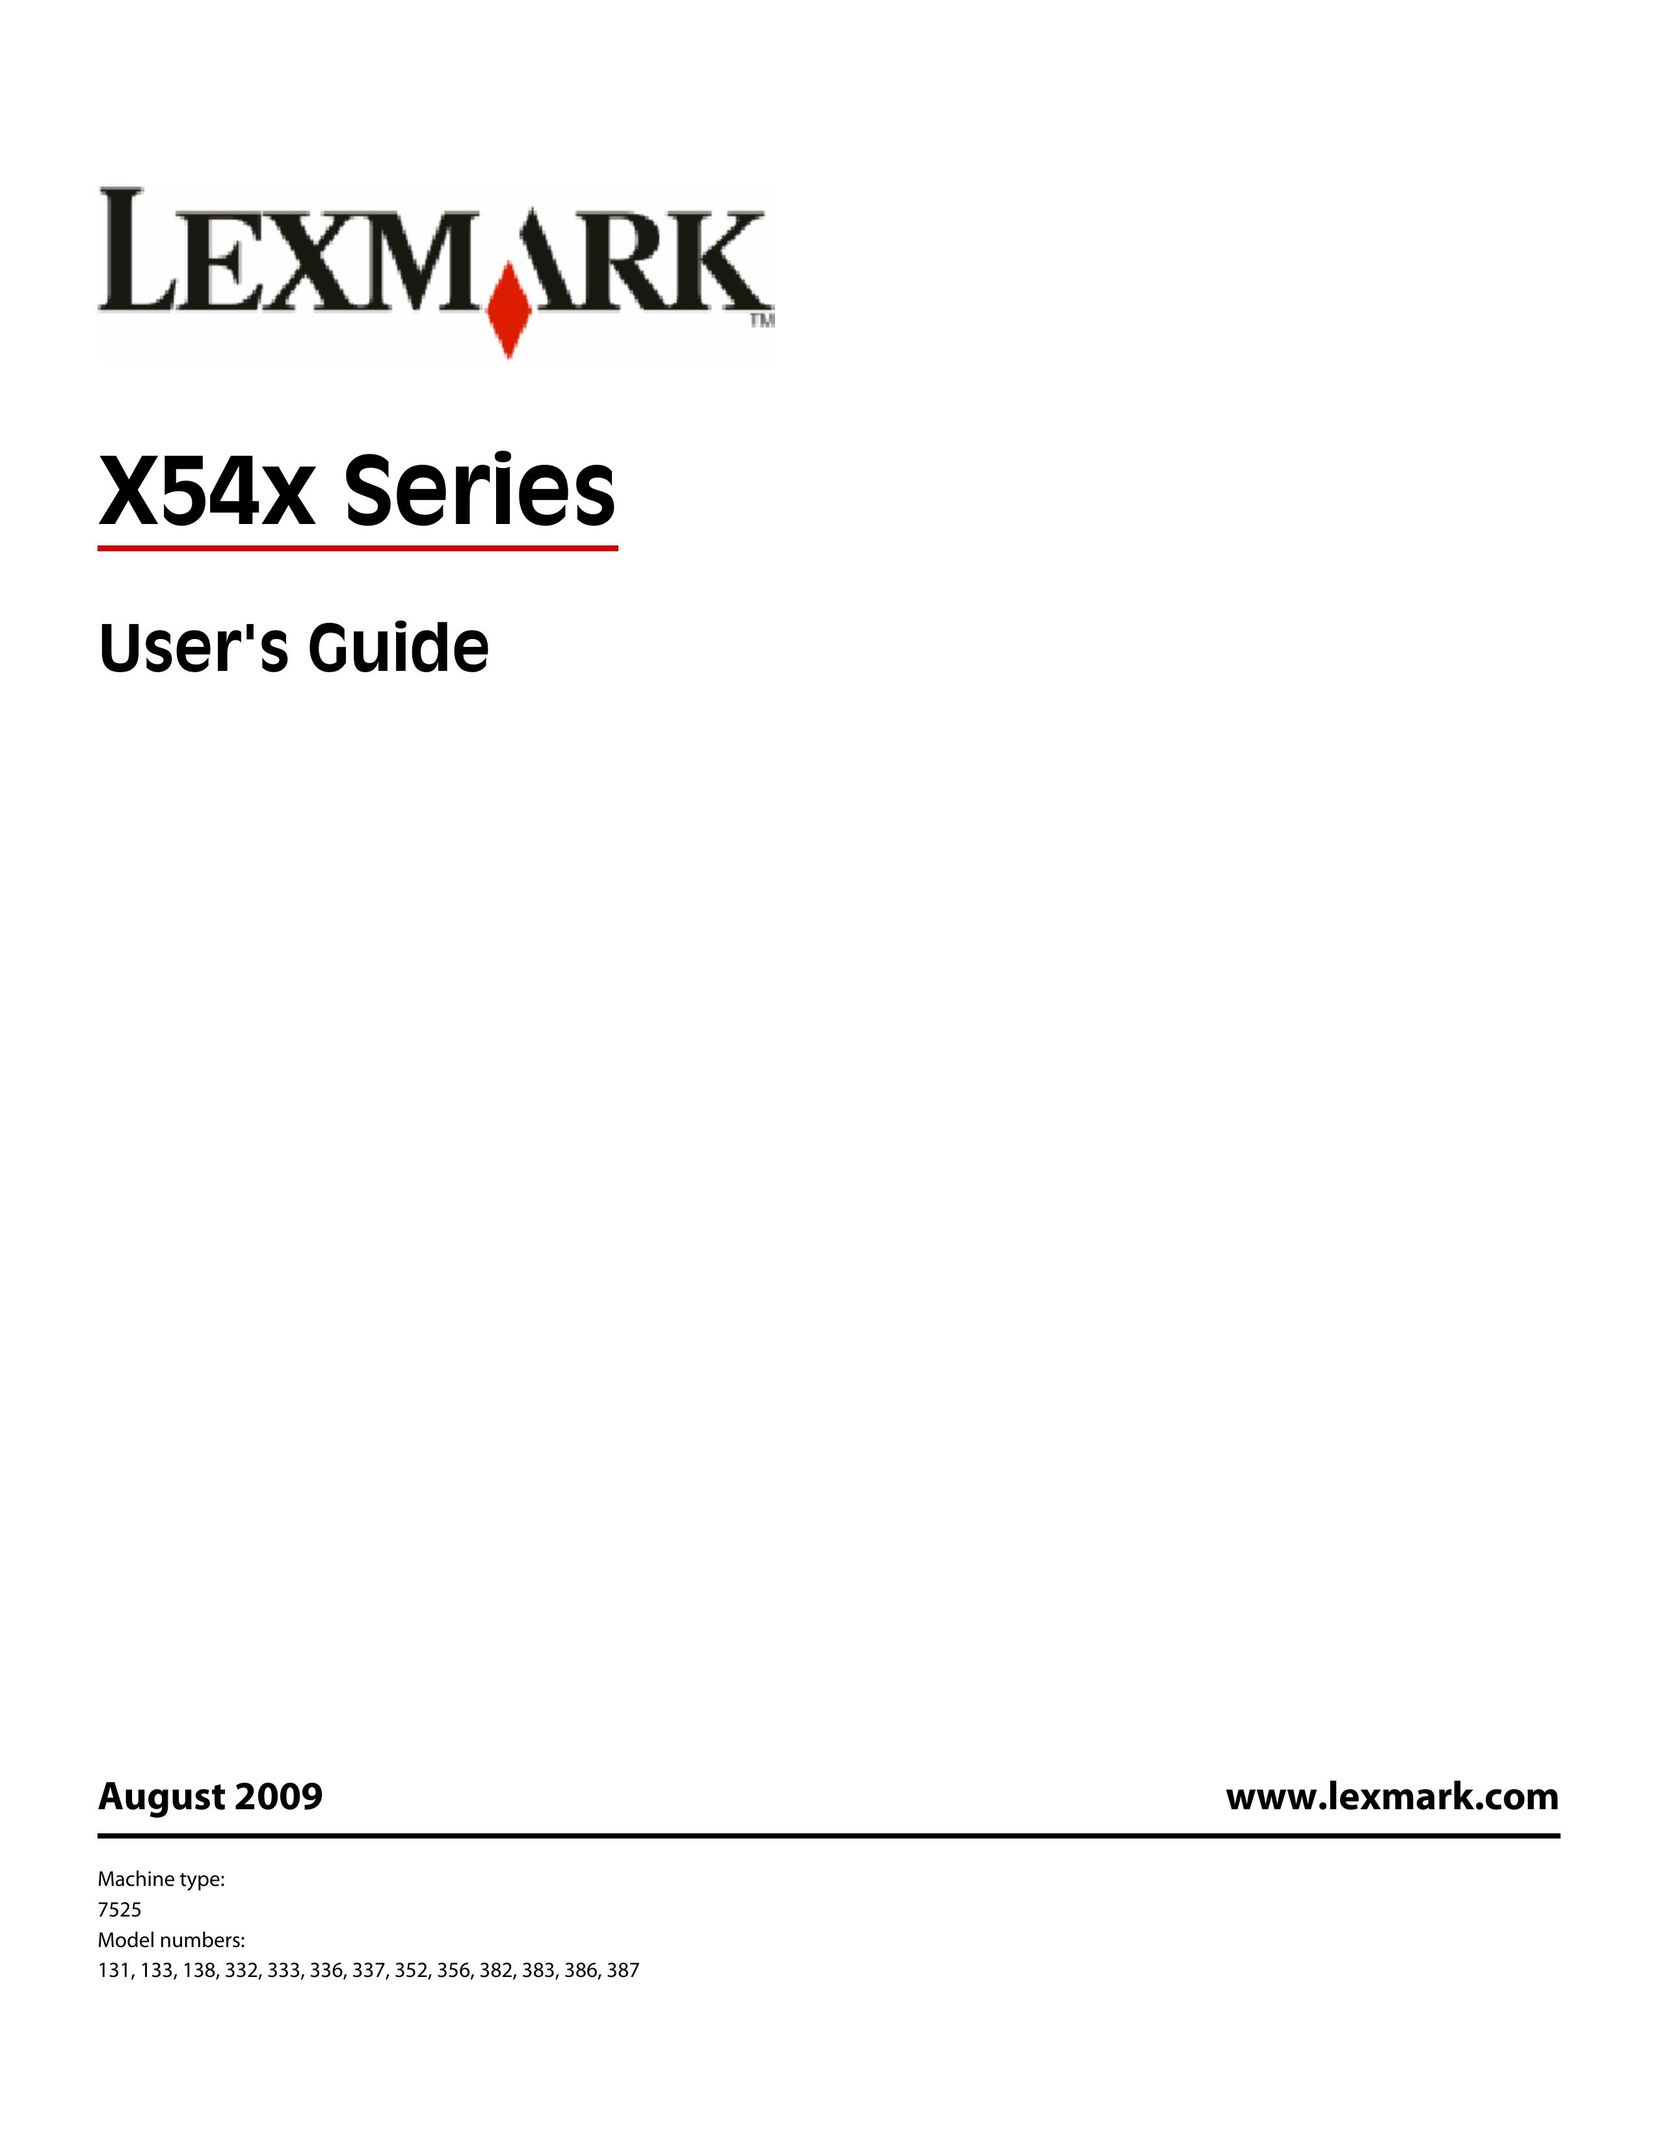 Lexmark 332 All in One Printer User Manual